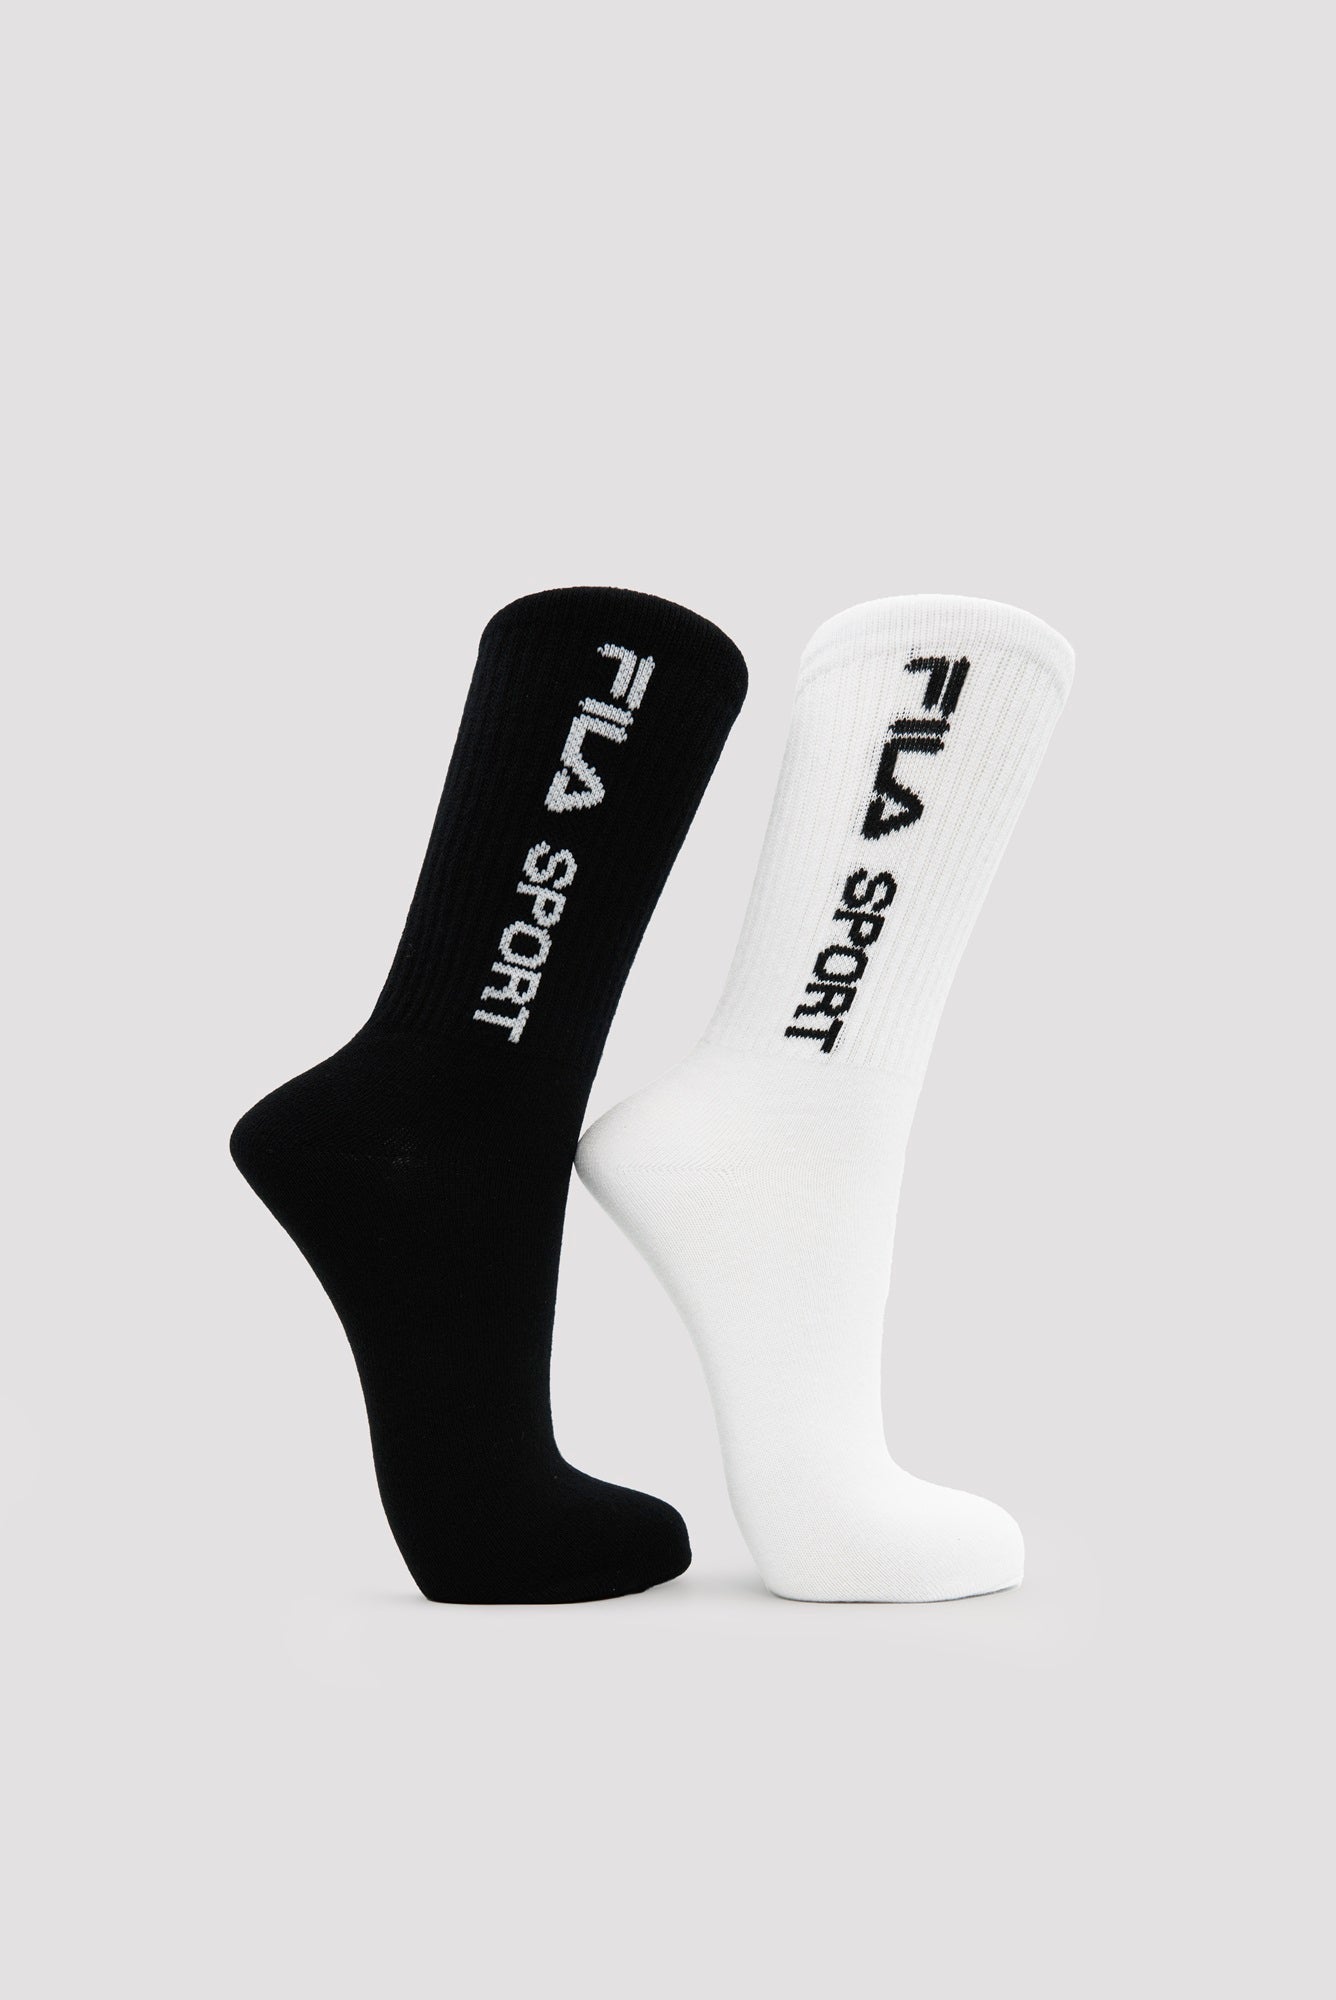 Men's Kobe 3/4 Socks 2 Pack (Size 6-11)